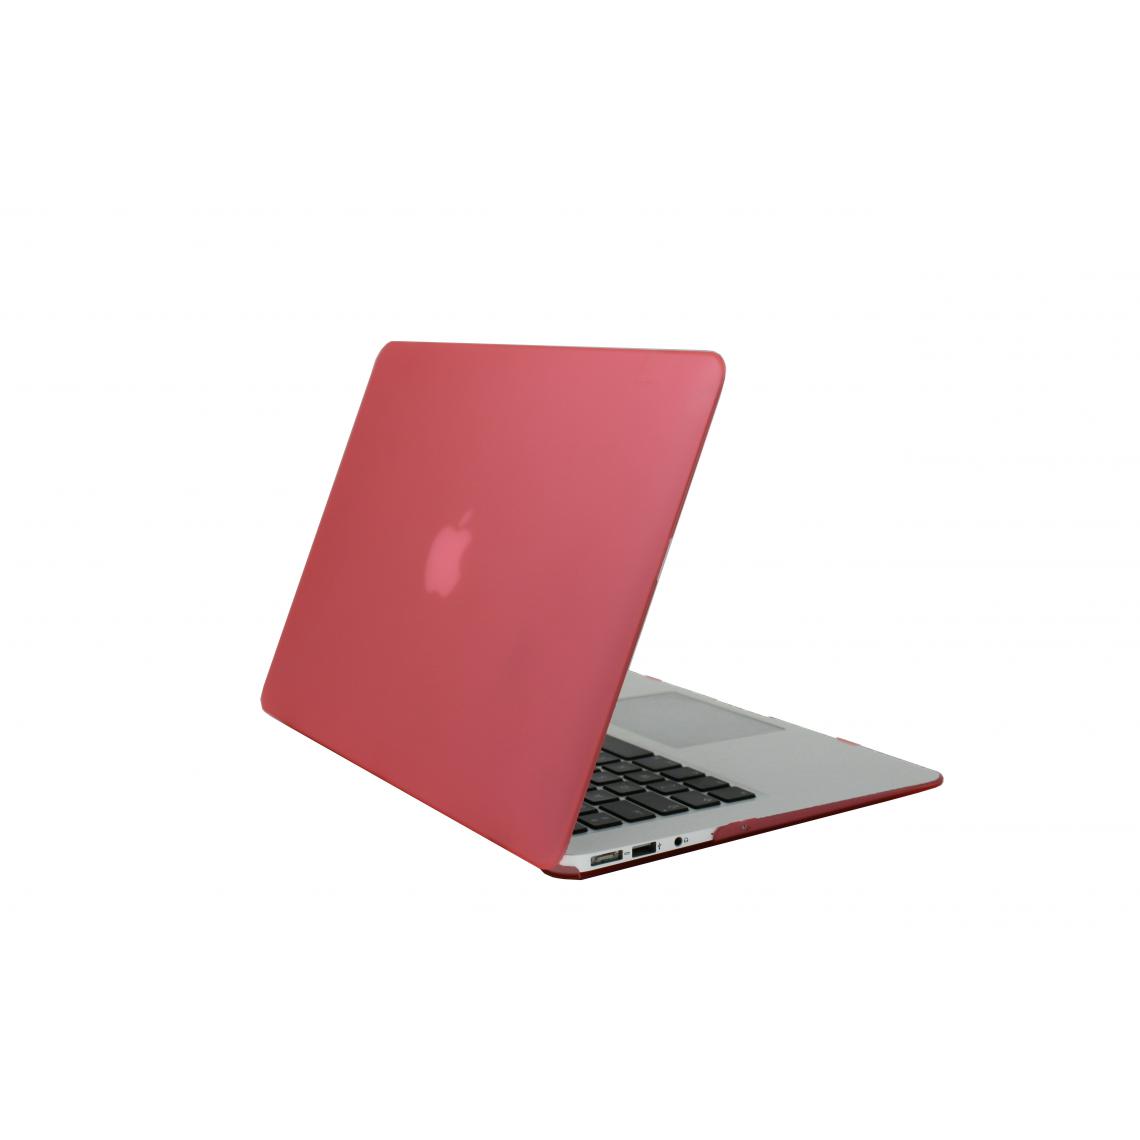 Apple - MacBook Air 13.3'' i5-5250U 4Go 128Go SSD - 2015 Coque Rose - MacBook